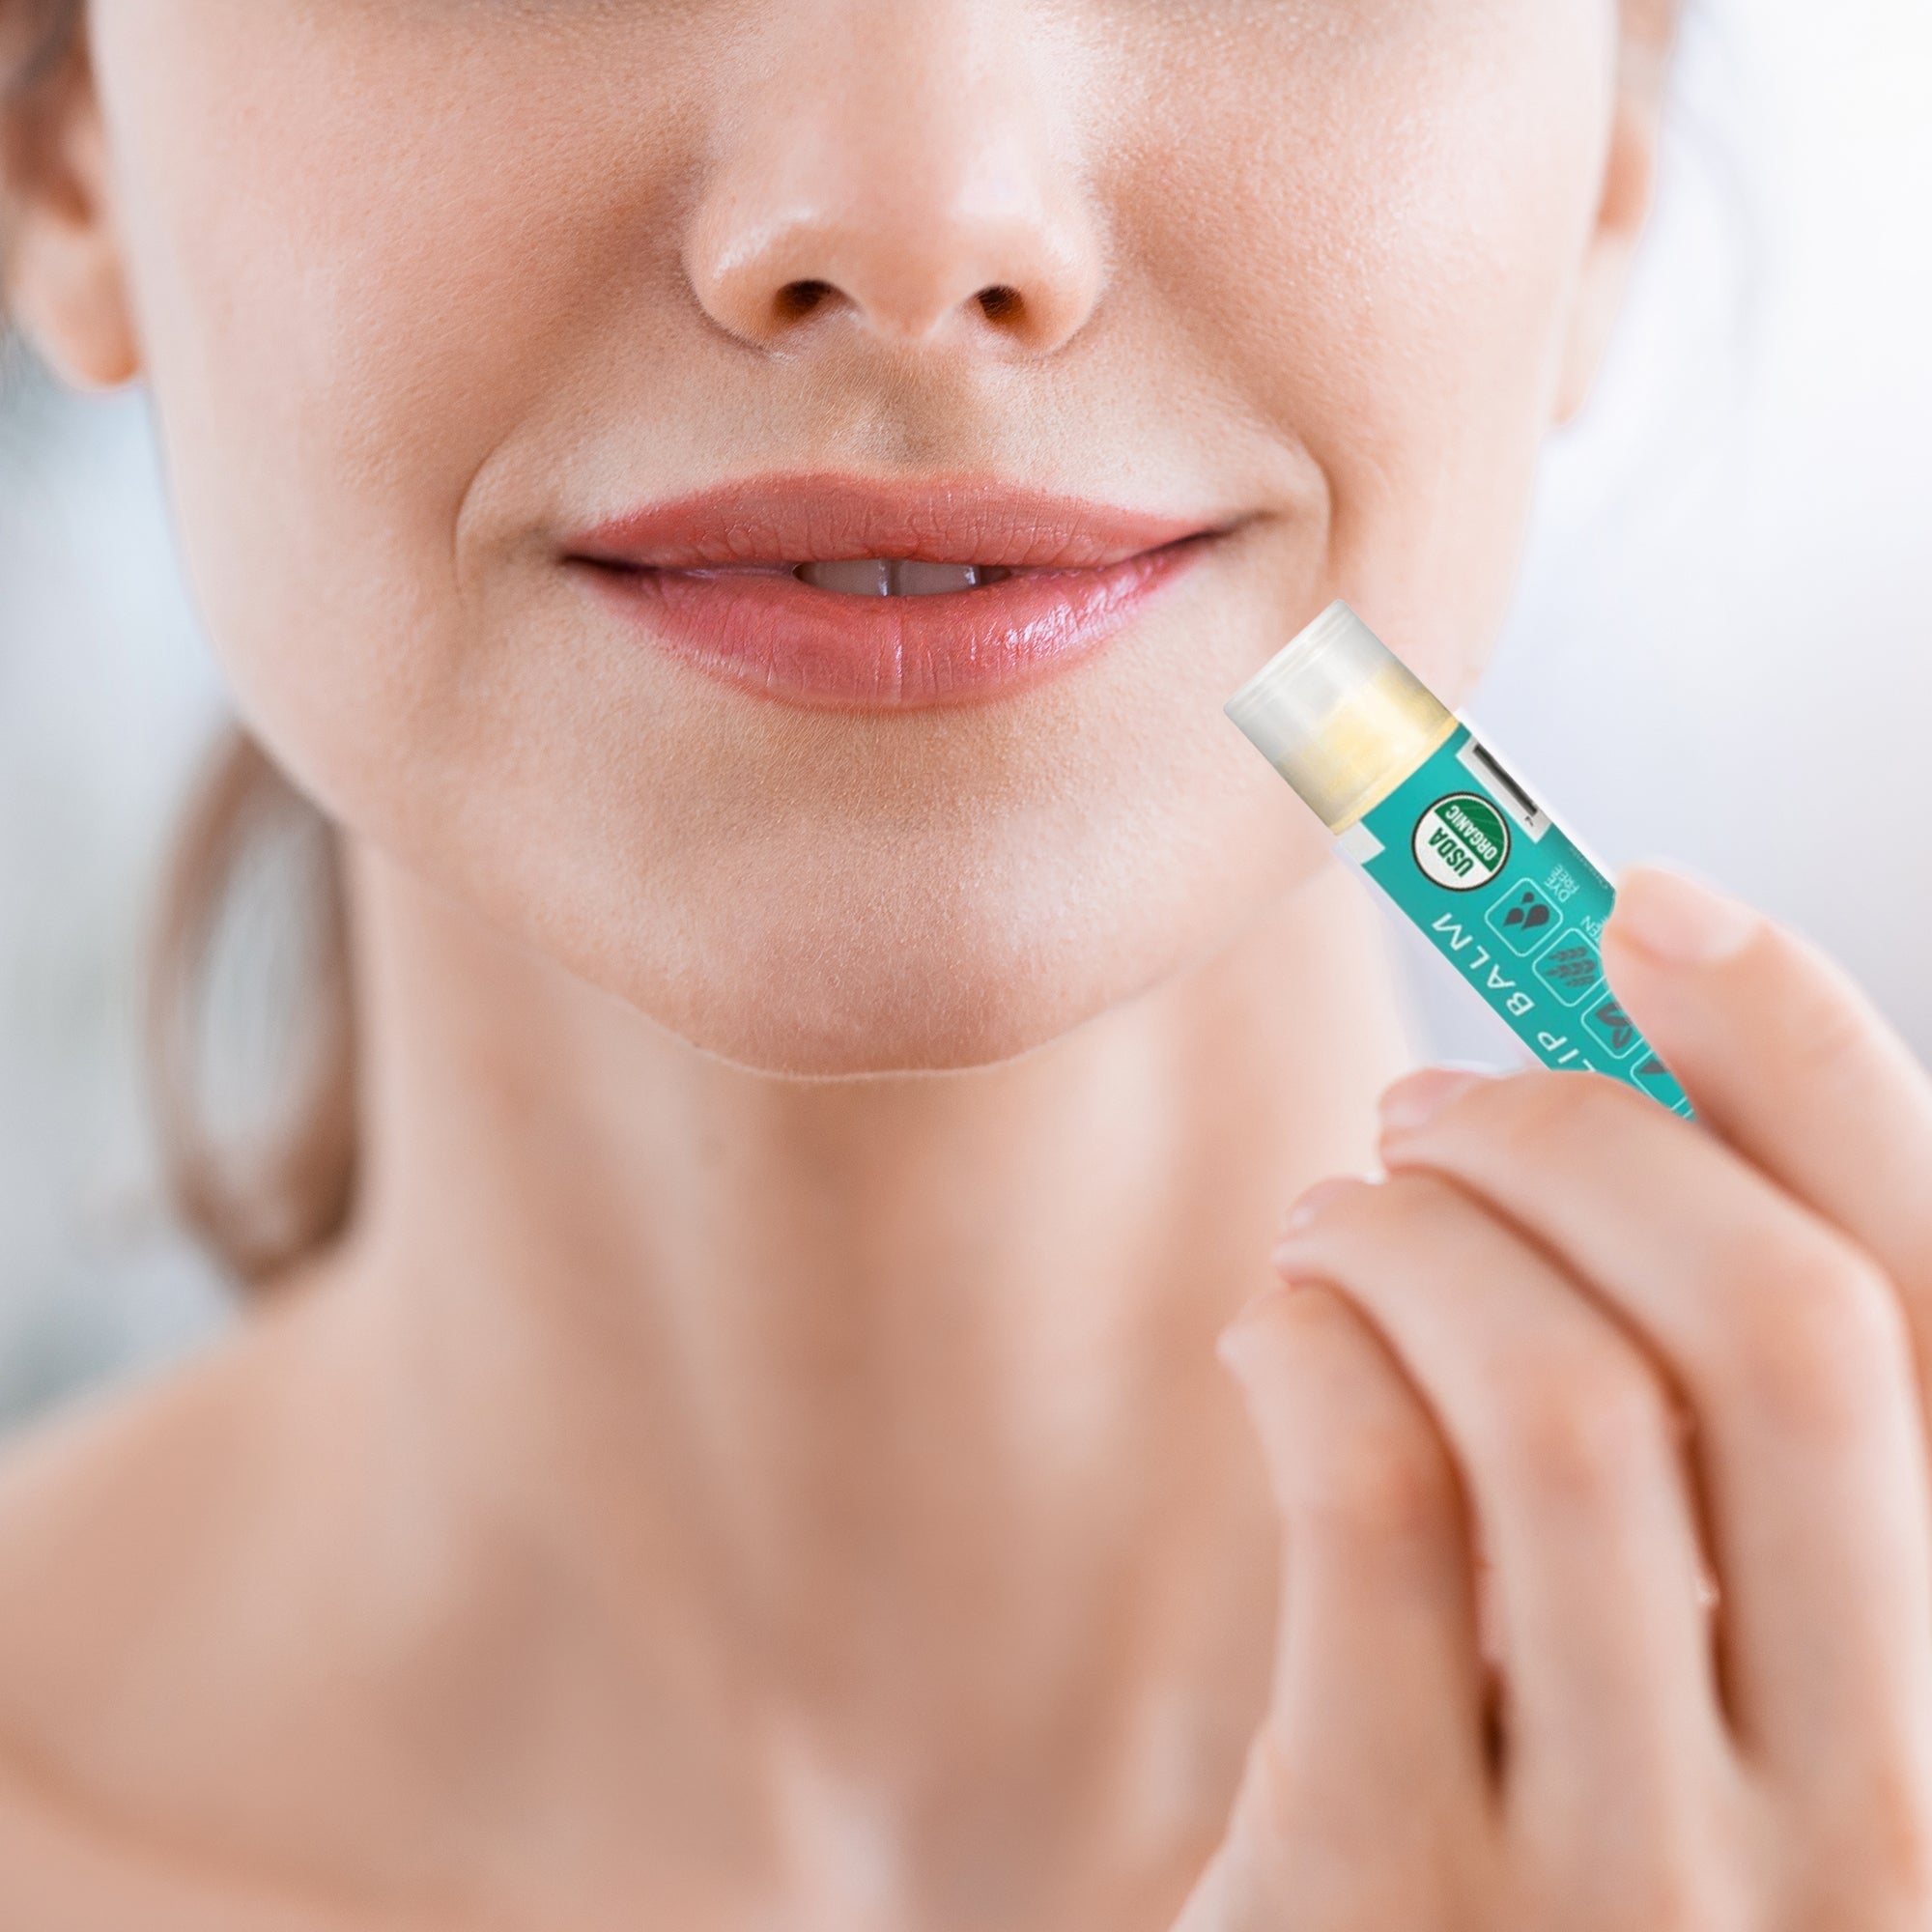 Customizable USDA-Certified Organic Lip Balm - Made in the USA